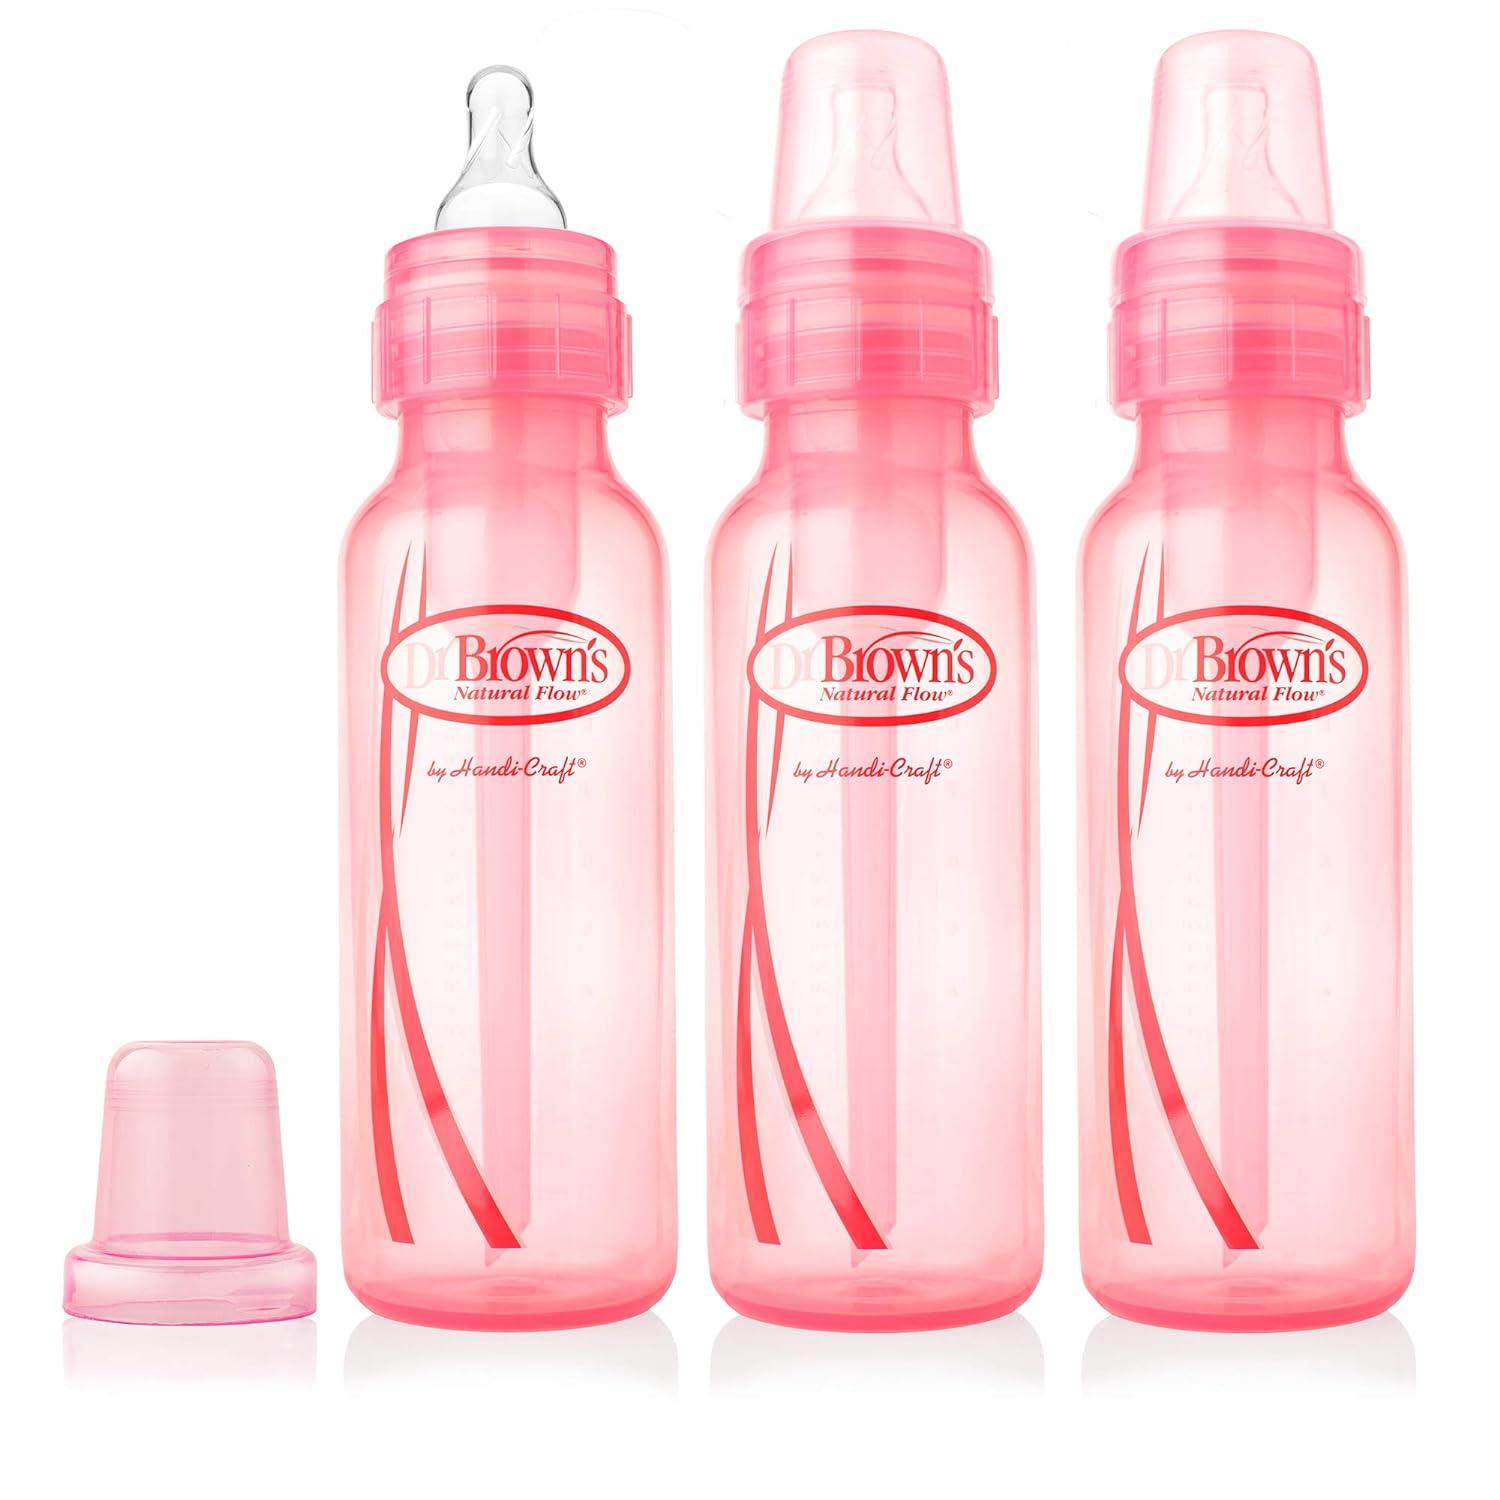 Dr. Brown's Baby Bottles Girls 6 Pack - 3 (8 oz) Lavender and 3 (8